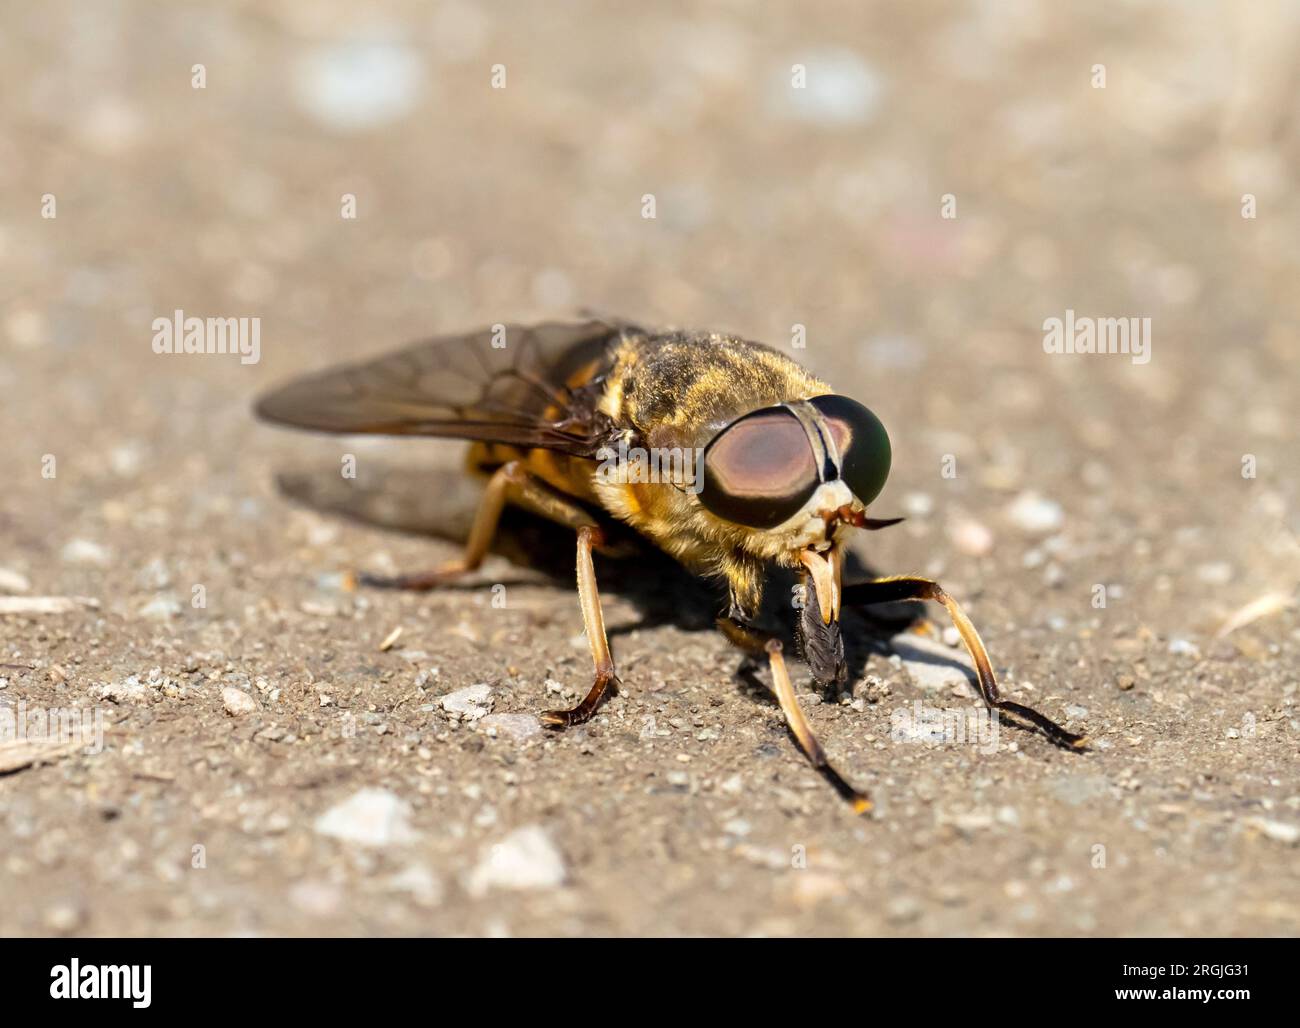 Tabanus sudeticus, Dark Giant Horsefly, Europes heaviest fly, in Ambleside, Lake District, UK. Stock Photo